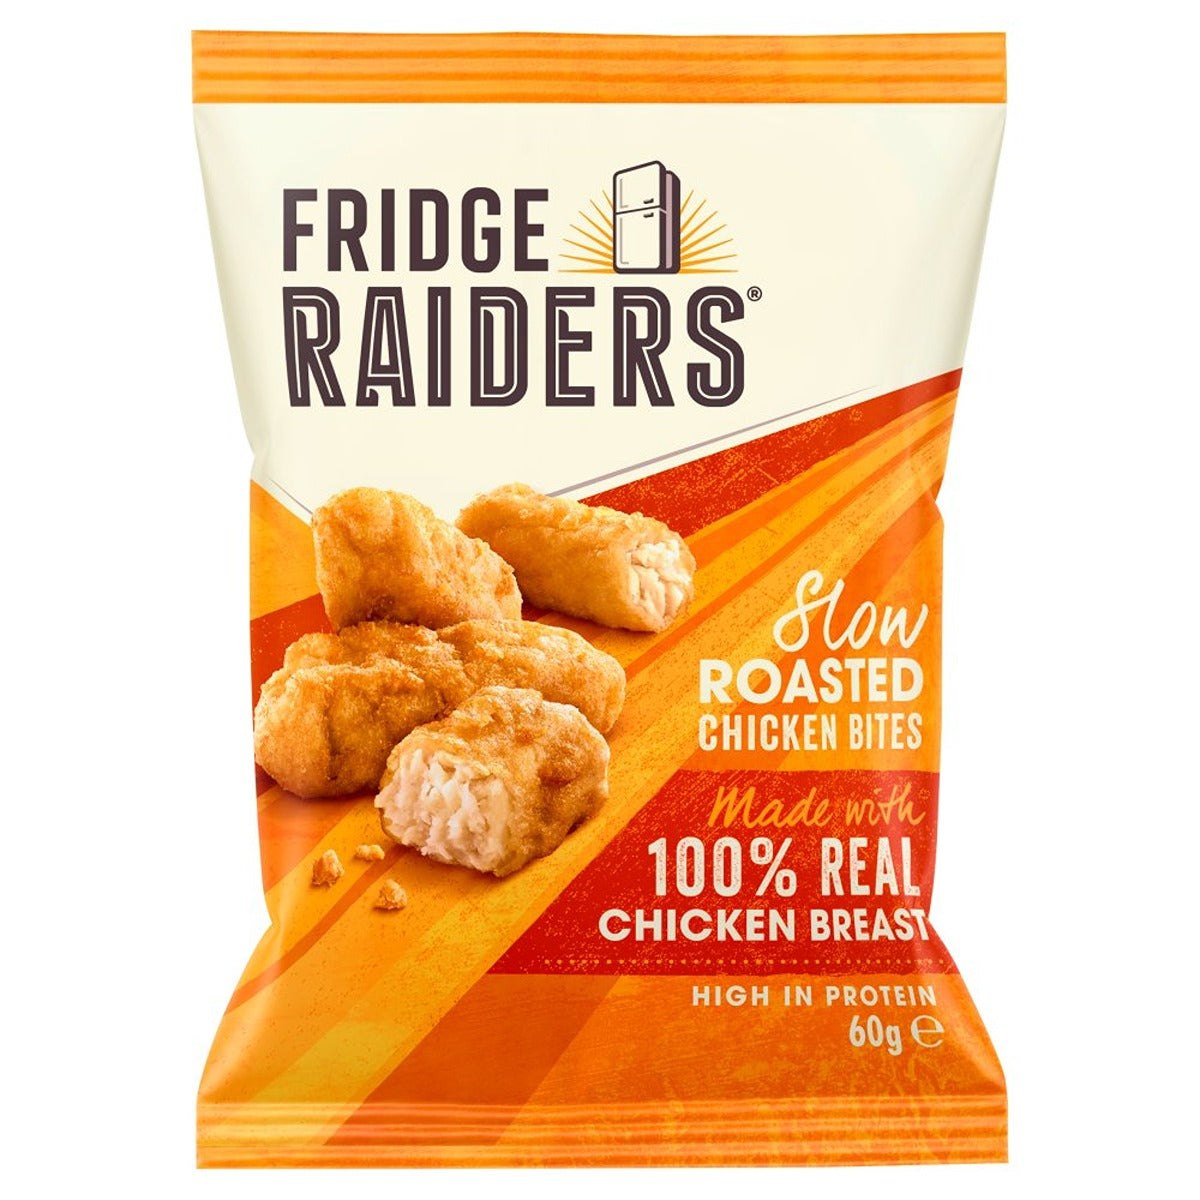 Fridge Raiders - Slow Roasted Chicken Bites - 60g - Continental Food Store